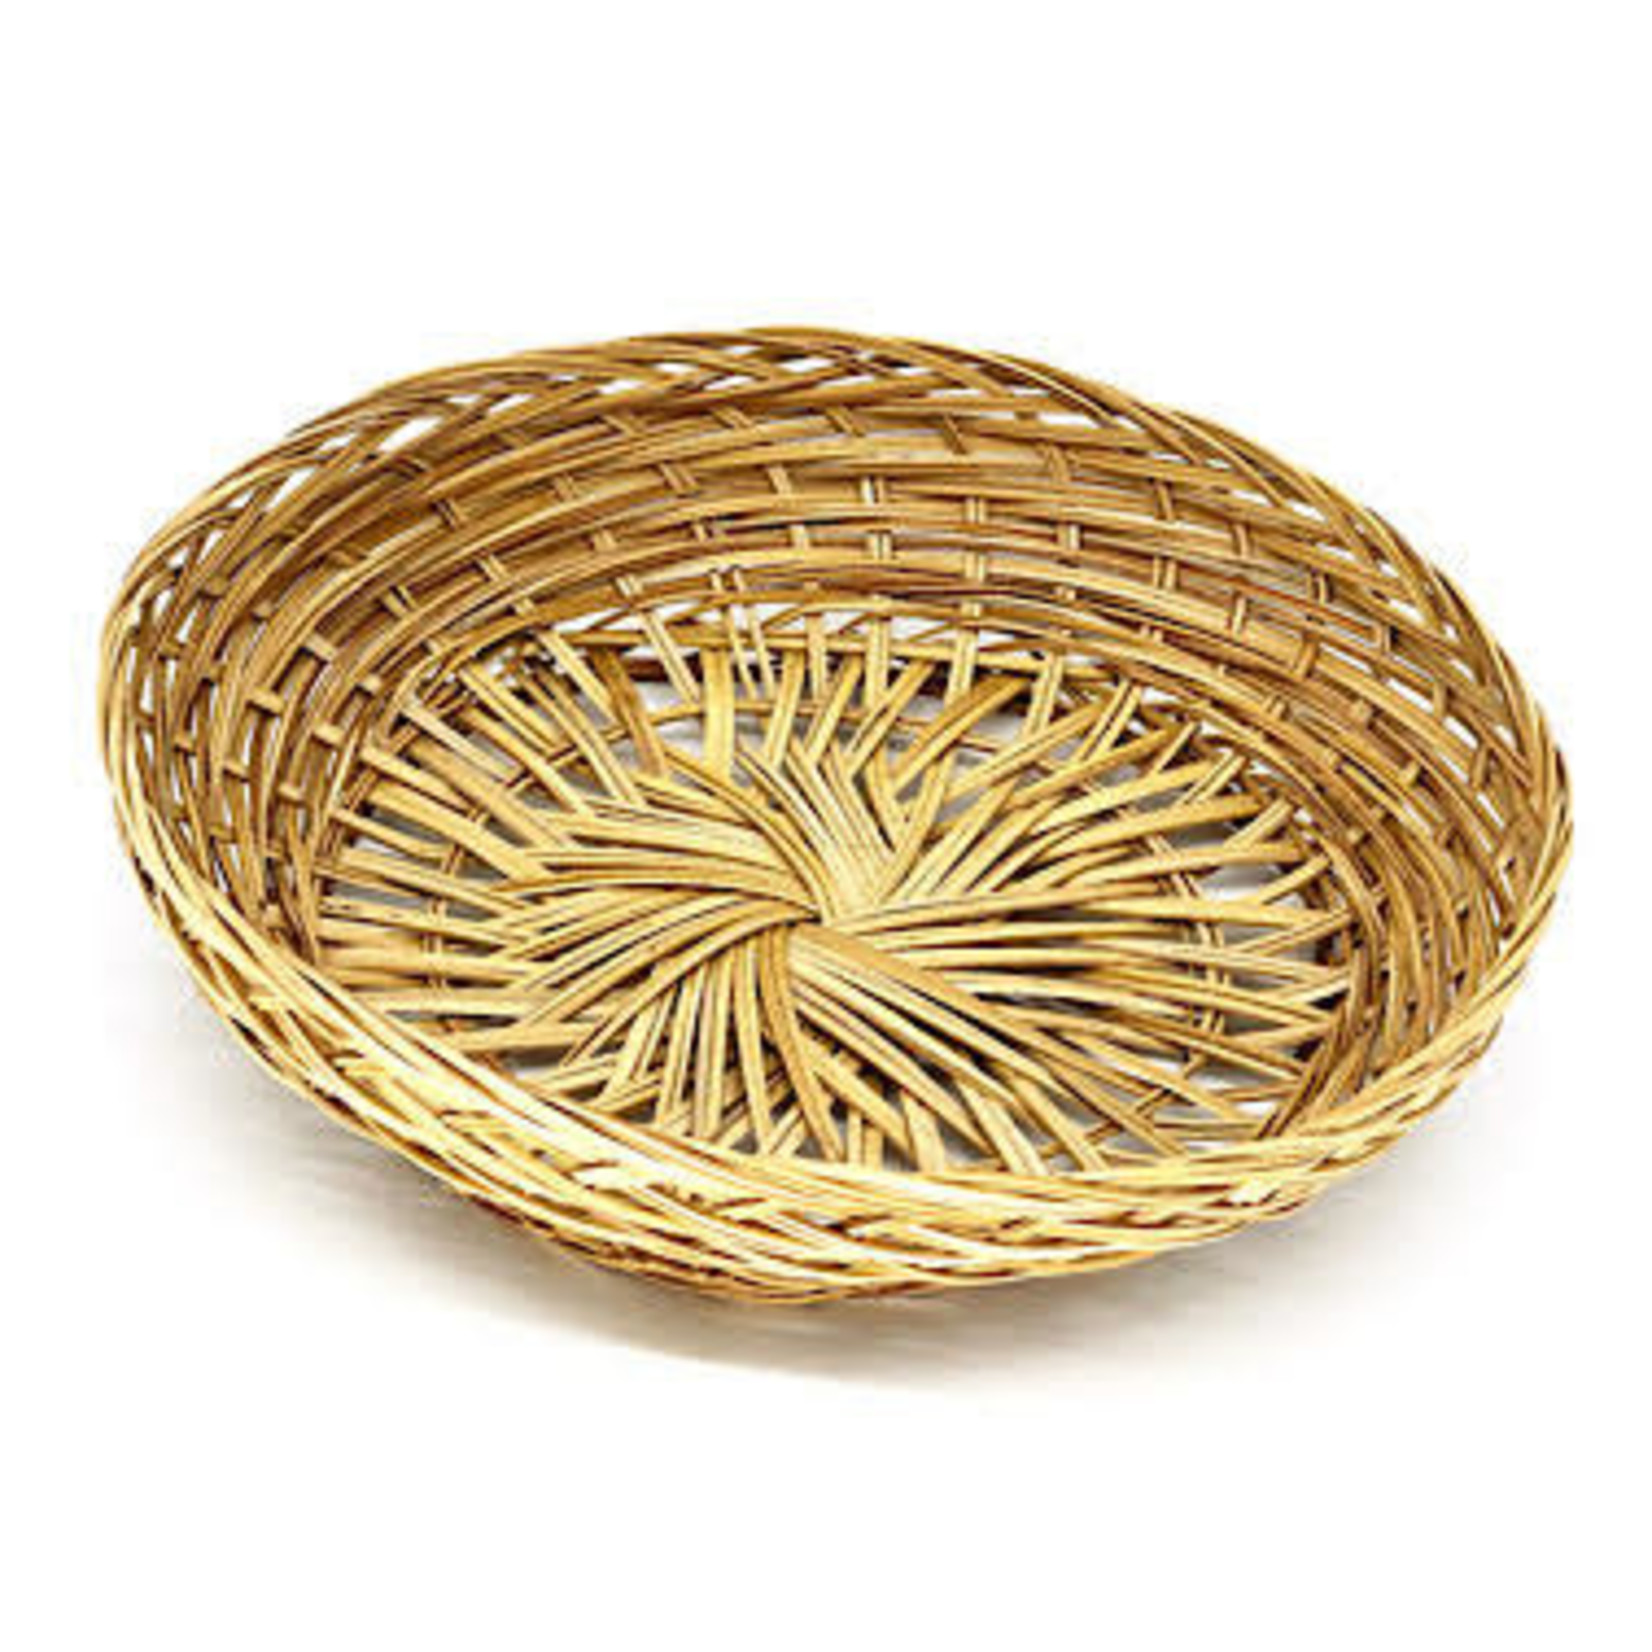 Woven Palm Frond Lunch Basket Medium